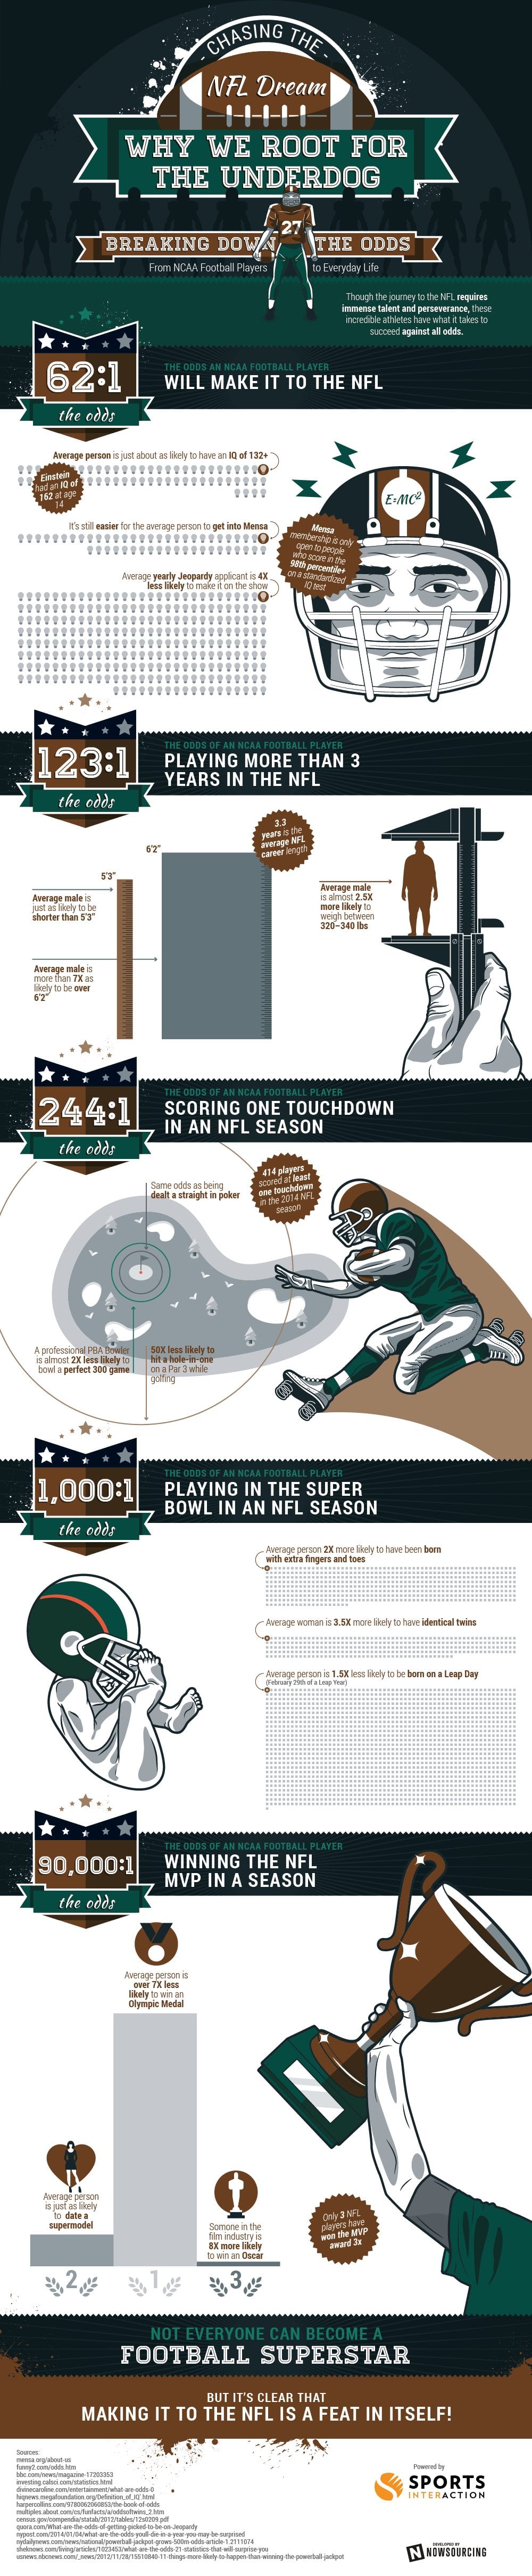 NFL Odds Comparison Infographic